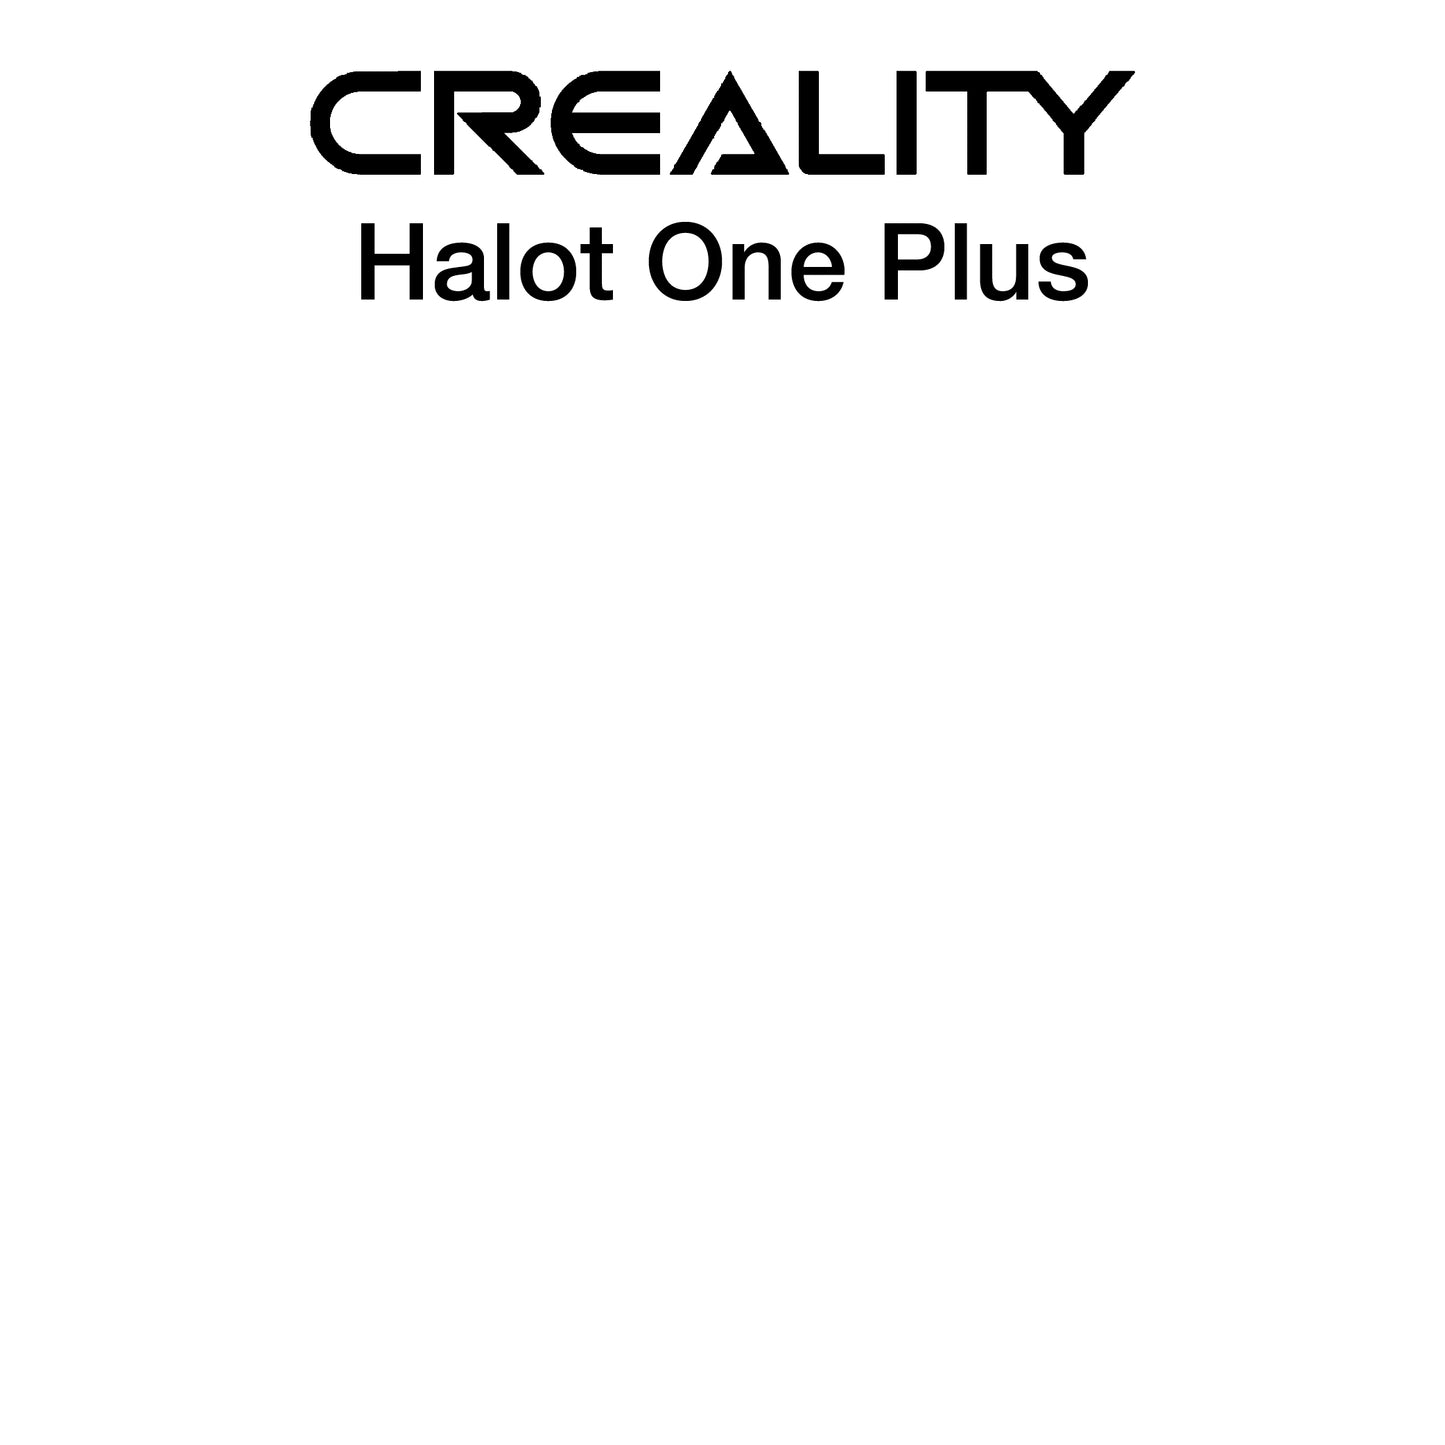 Kit - Creality Halot One Plus - 176 x 105